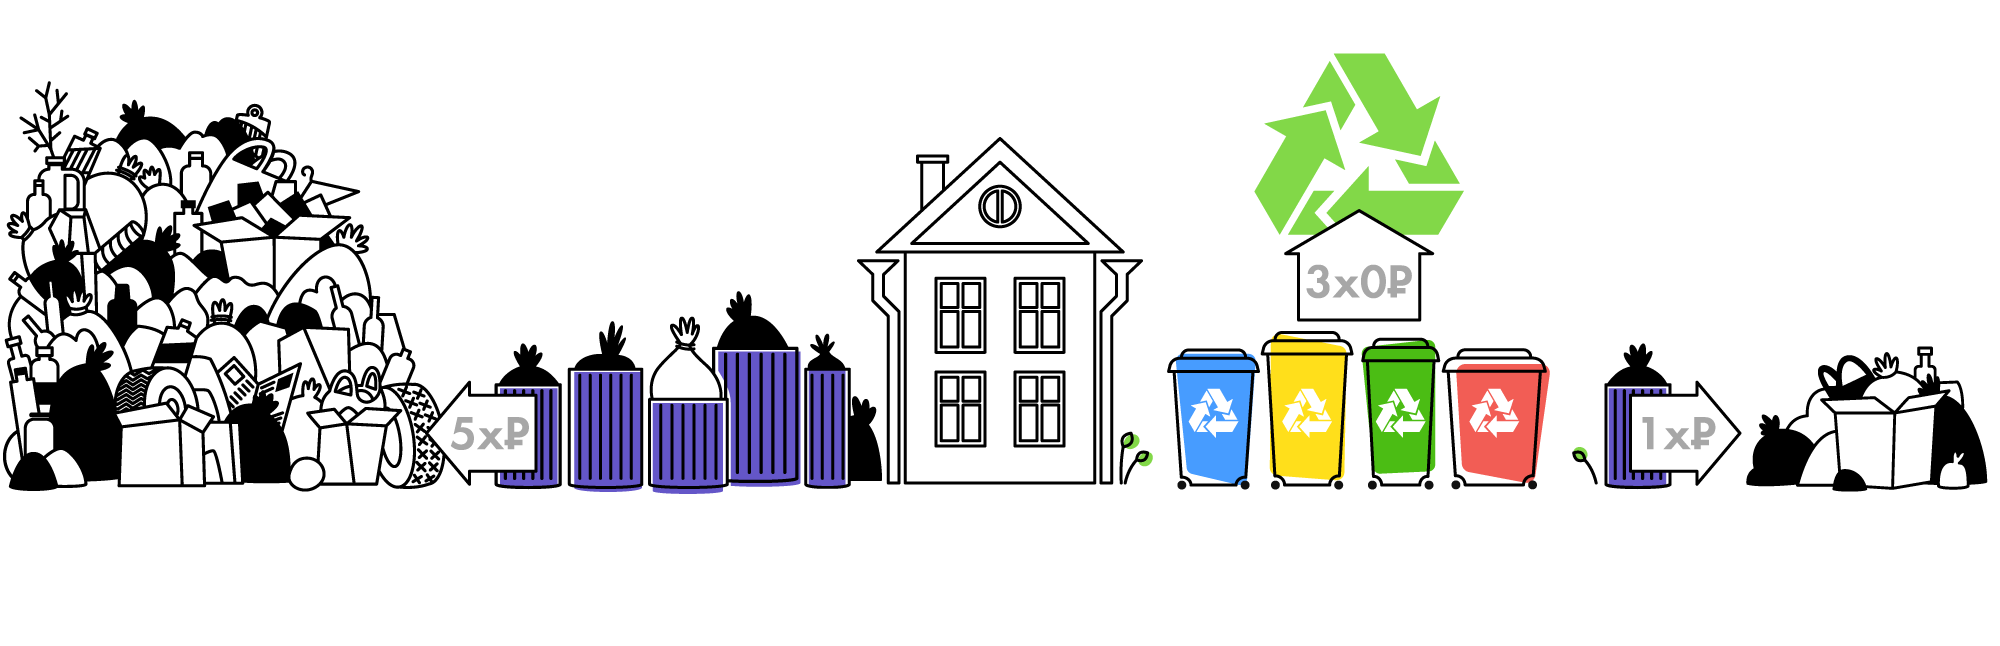 Сбор и утилизация мусора